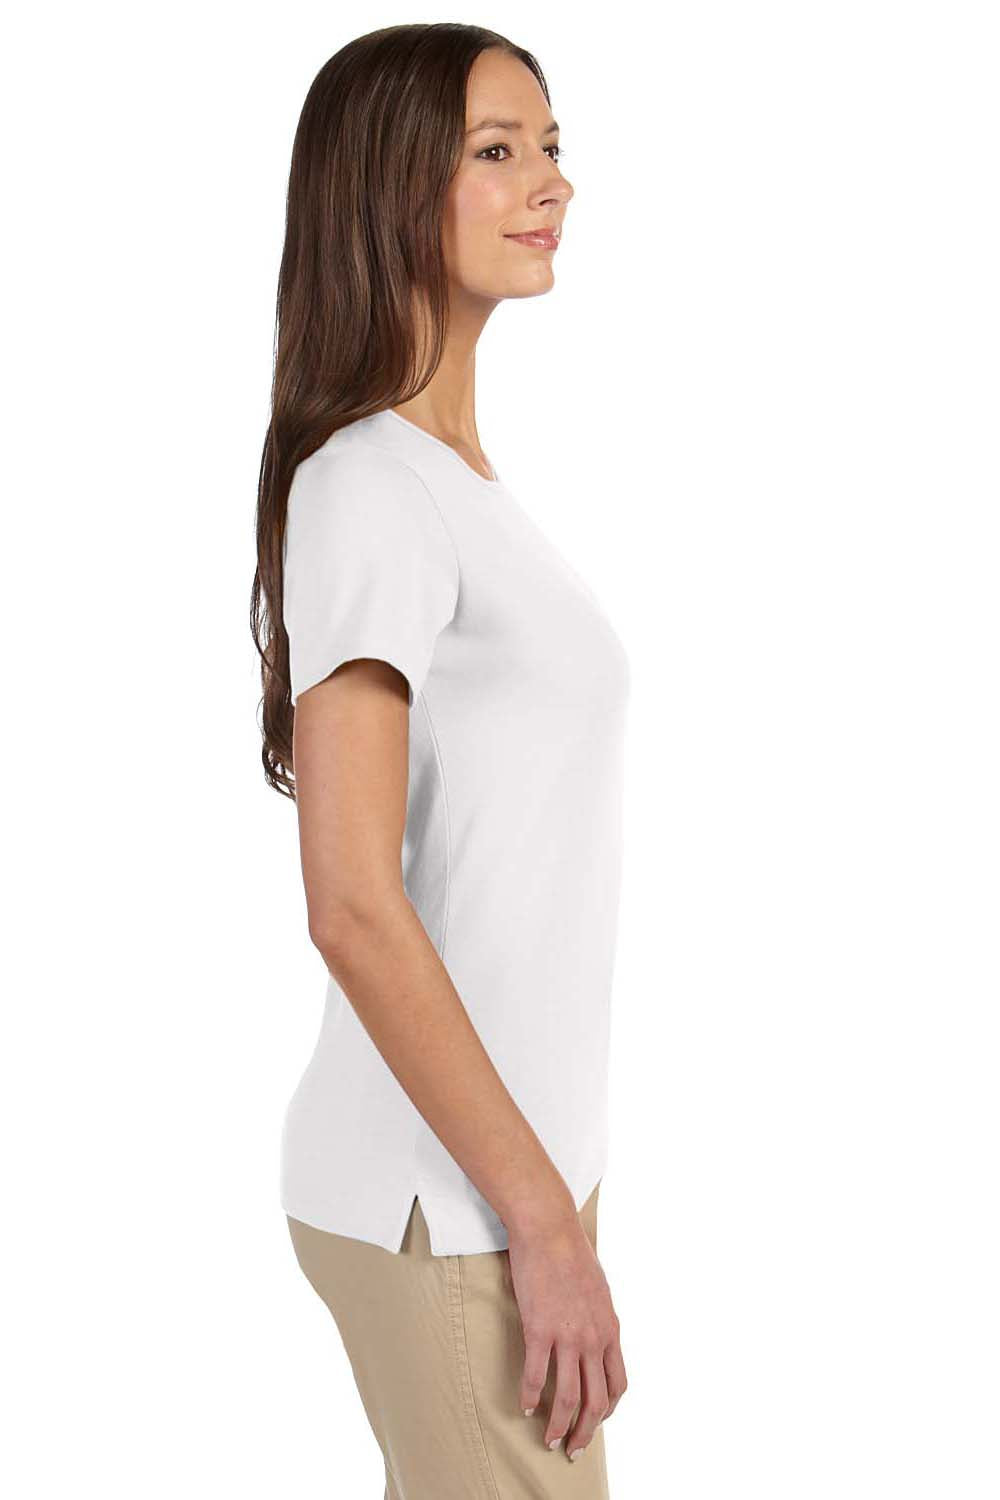 Devon & Jones DP182W Womens Perfect Fit Short Sleeve Crewneck T-Shirt White Side